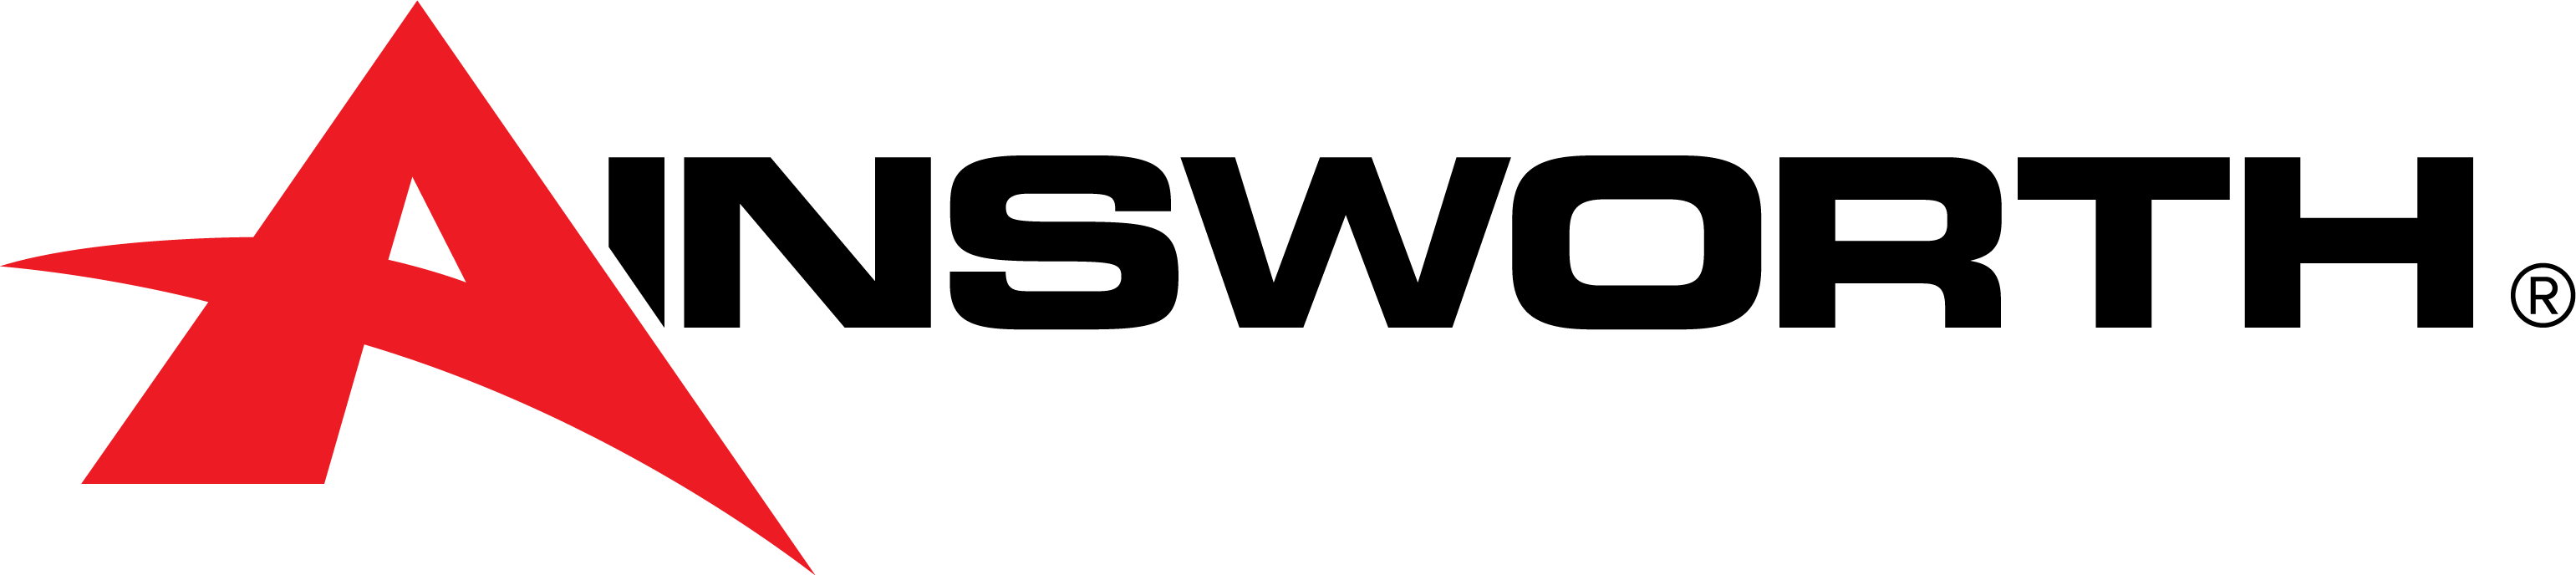 Ainsworth Corporate Logo Colour